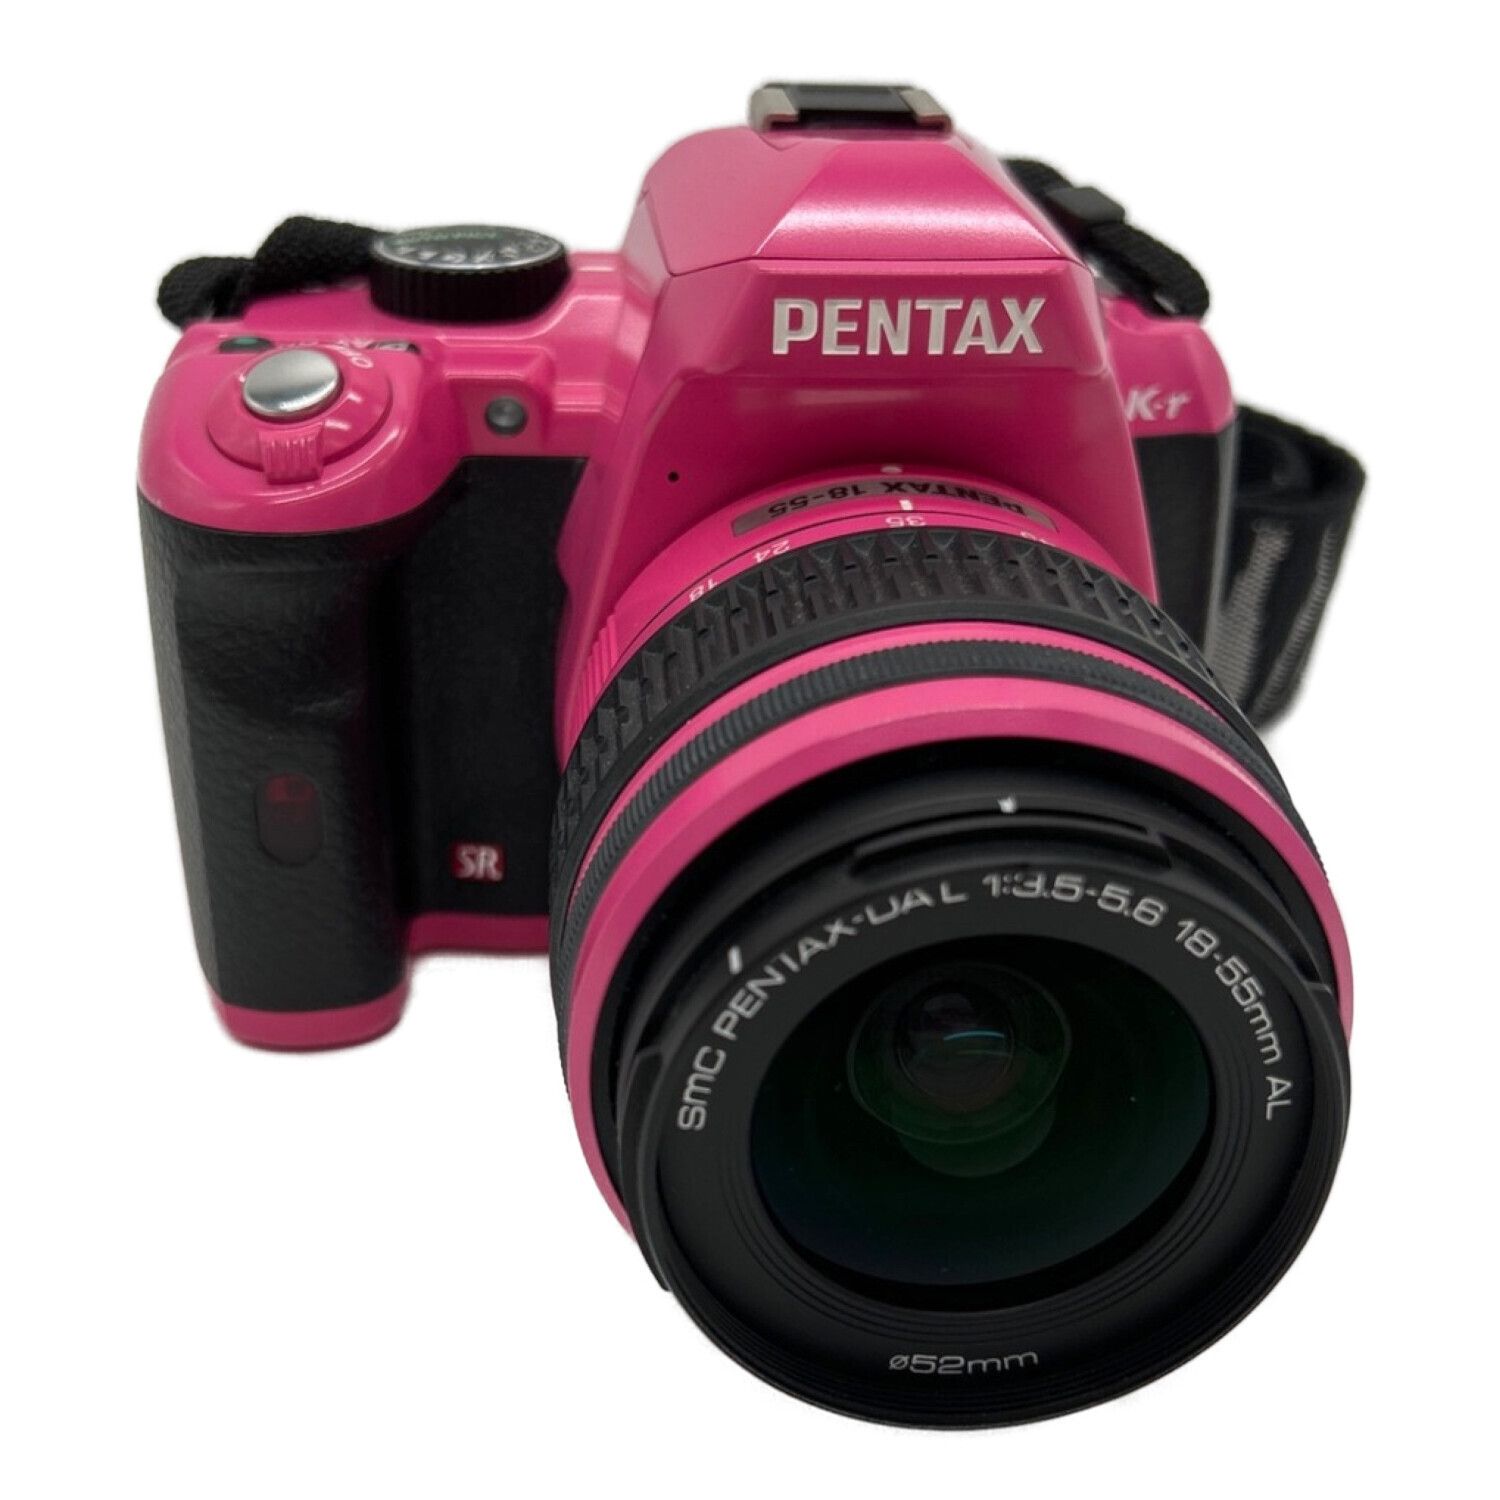 PENTAX (ペンタックス) デジタル一眼レフカメラ K-r 1290万画素 